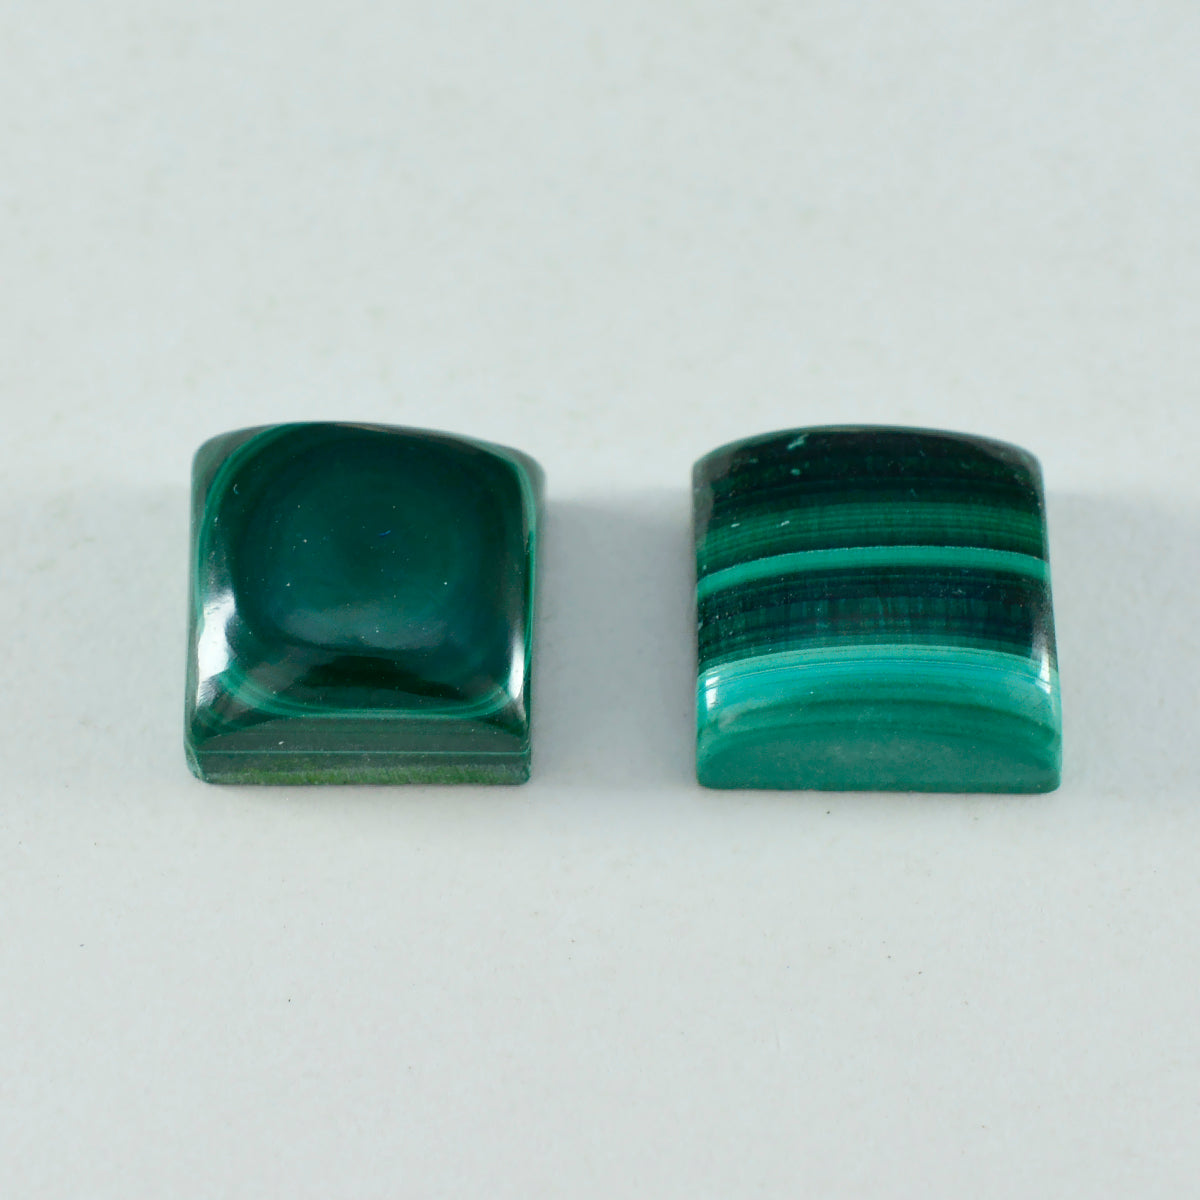 Riyogems 1PC Green Malachite Cabochon 11x11 mm Square Shape AAA Quality Loose Gems